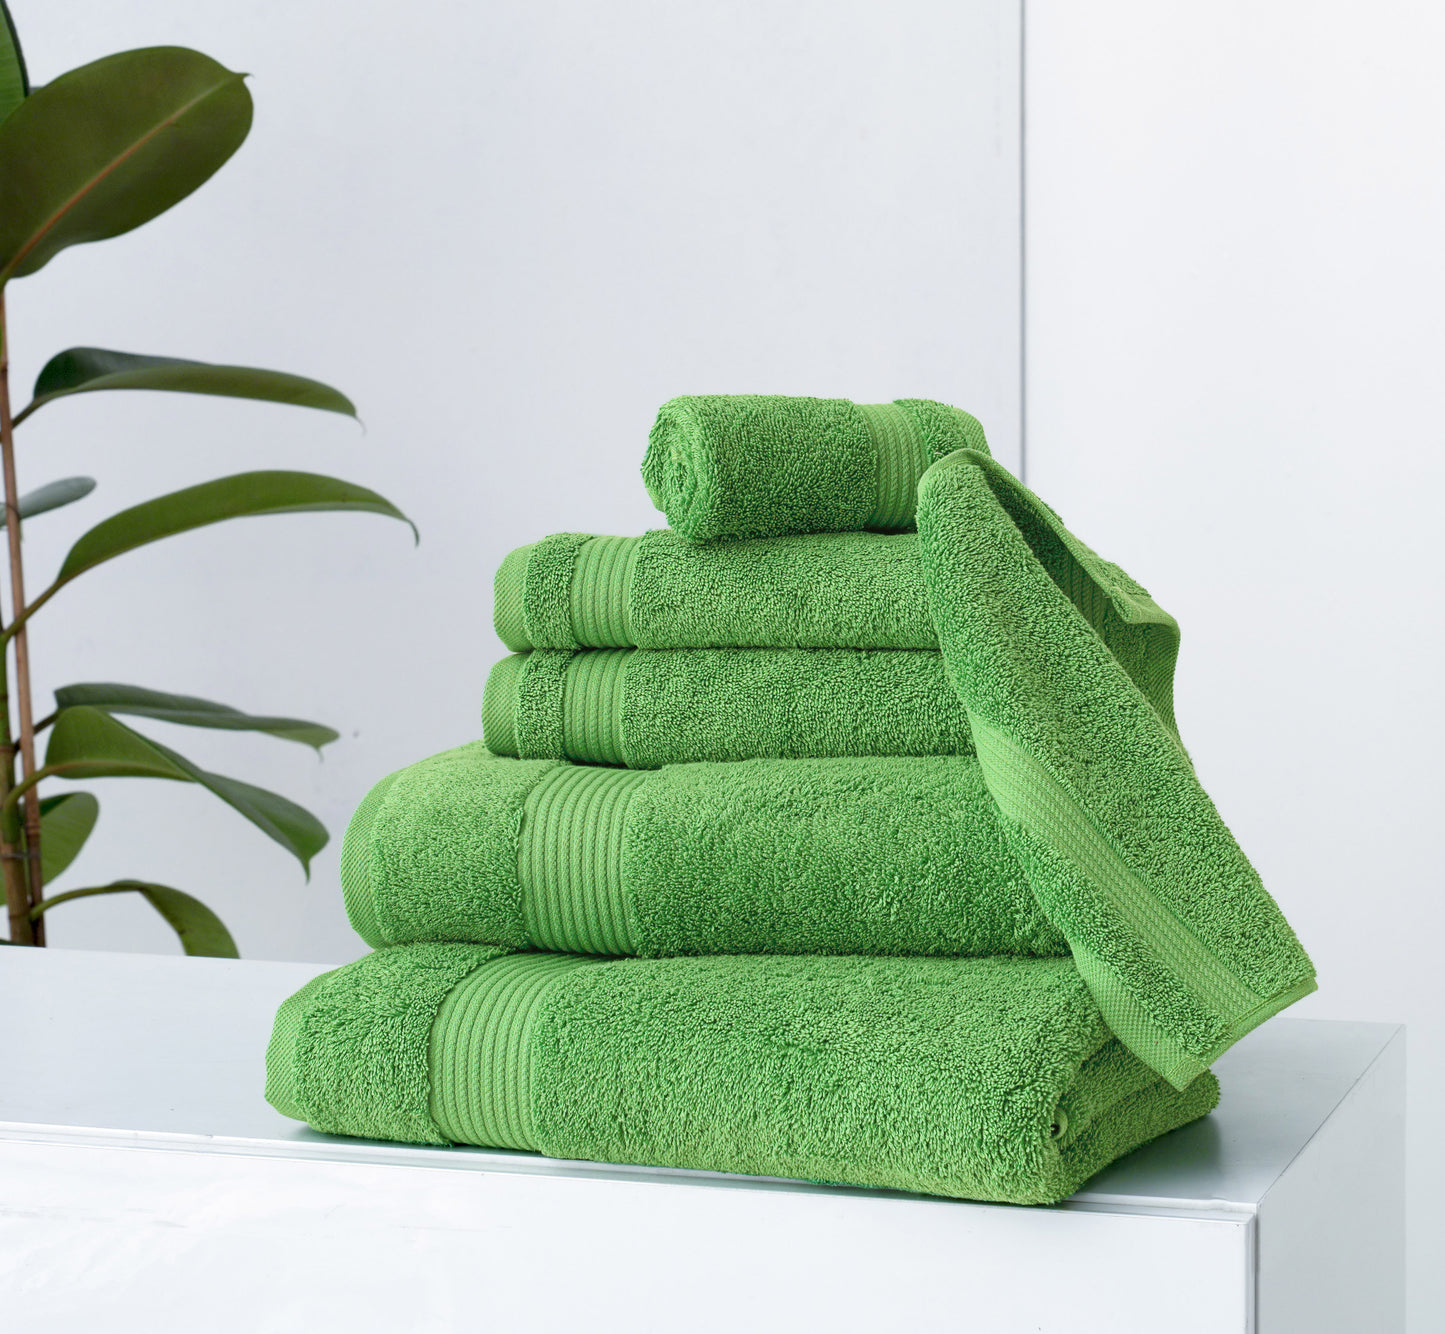 Amadeus Luxury Turkish Cotton Premium 6 Pc Towel Set - Classic Turkish Towels